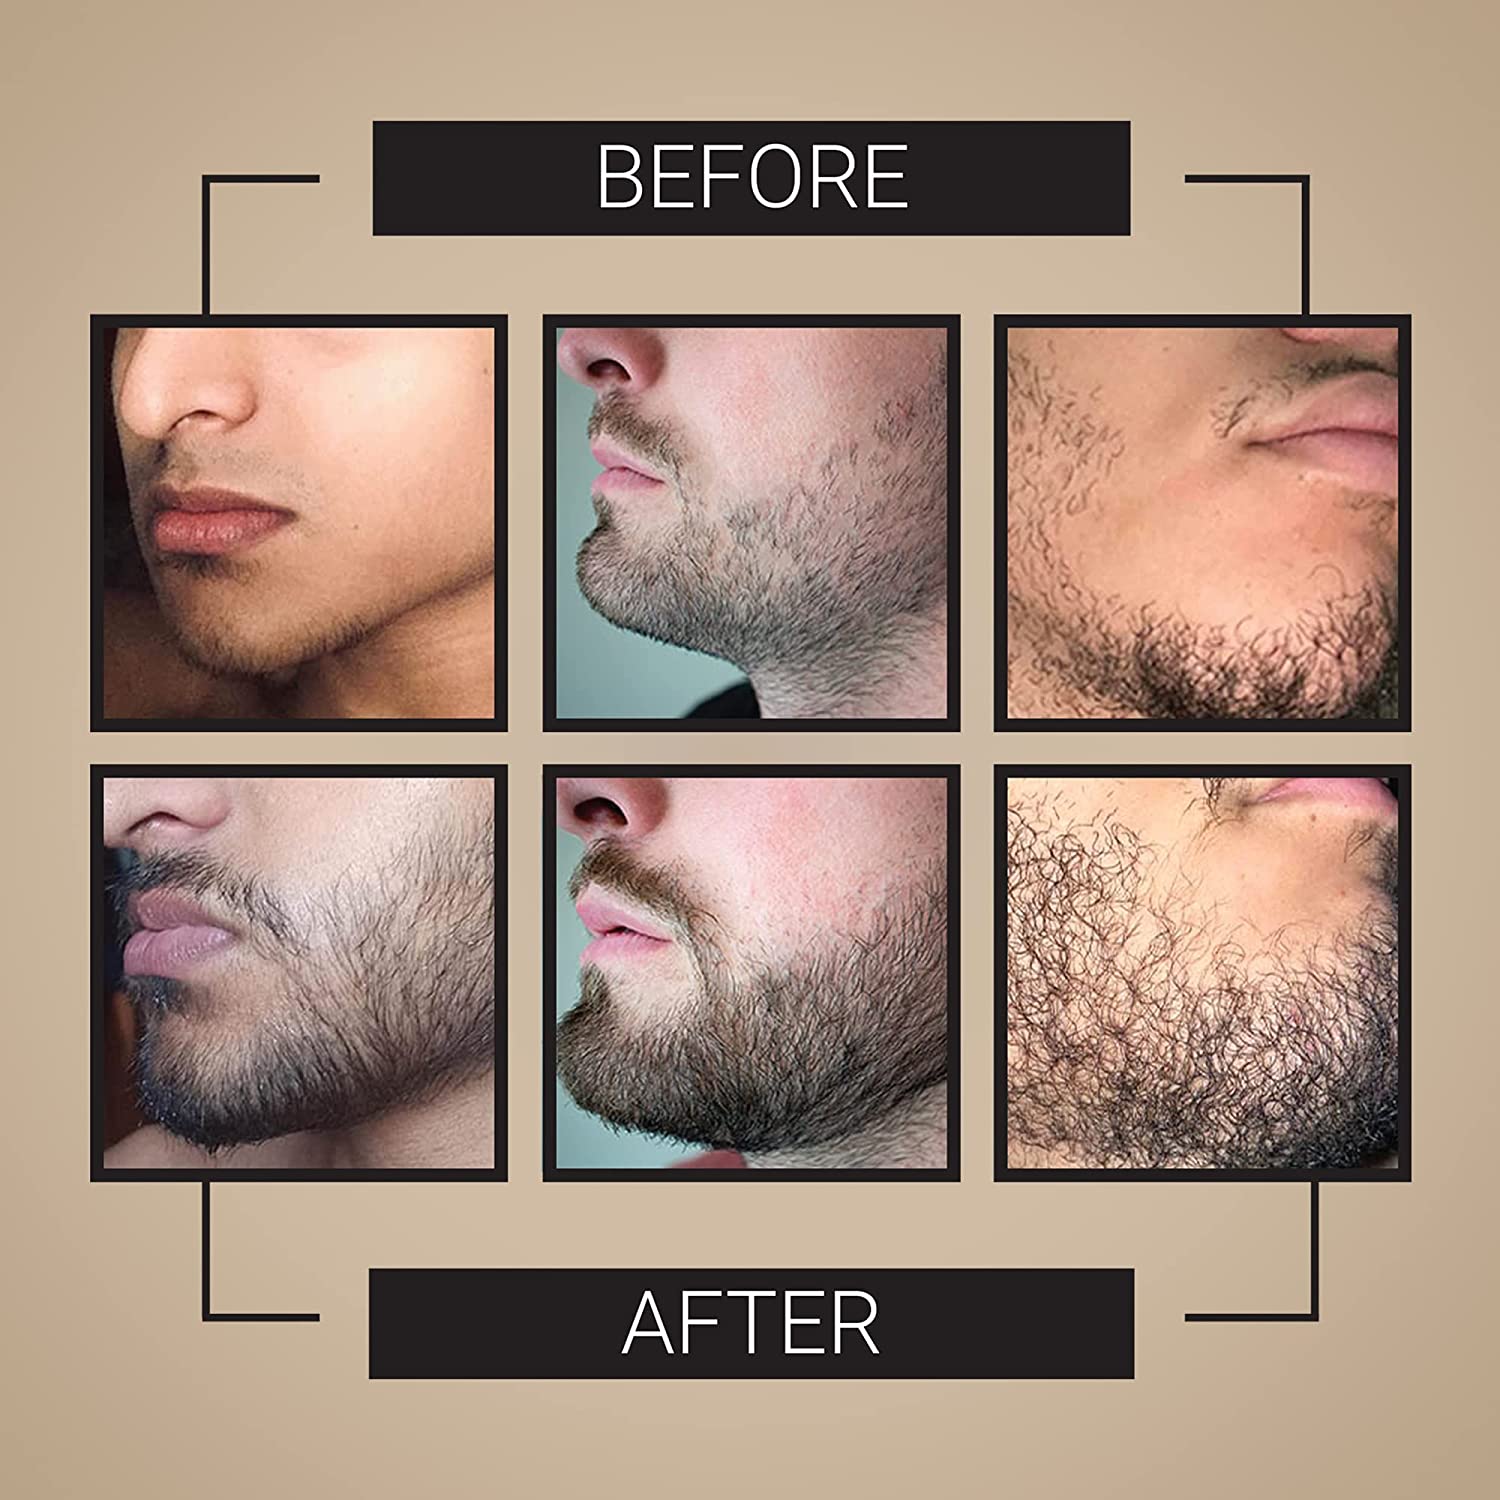 Derma Roller for Beard Growth + Beard Growth Serum - Stimulate Beard and Hair Growth - Derma Roller for Men - Amazing Beard Growth Kit - image 2 of 6